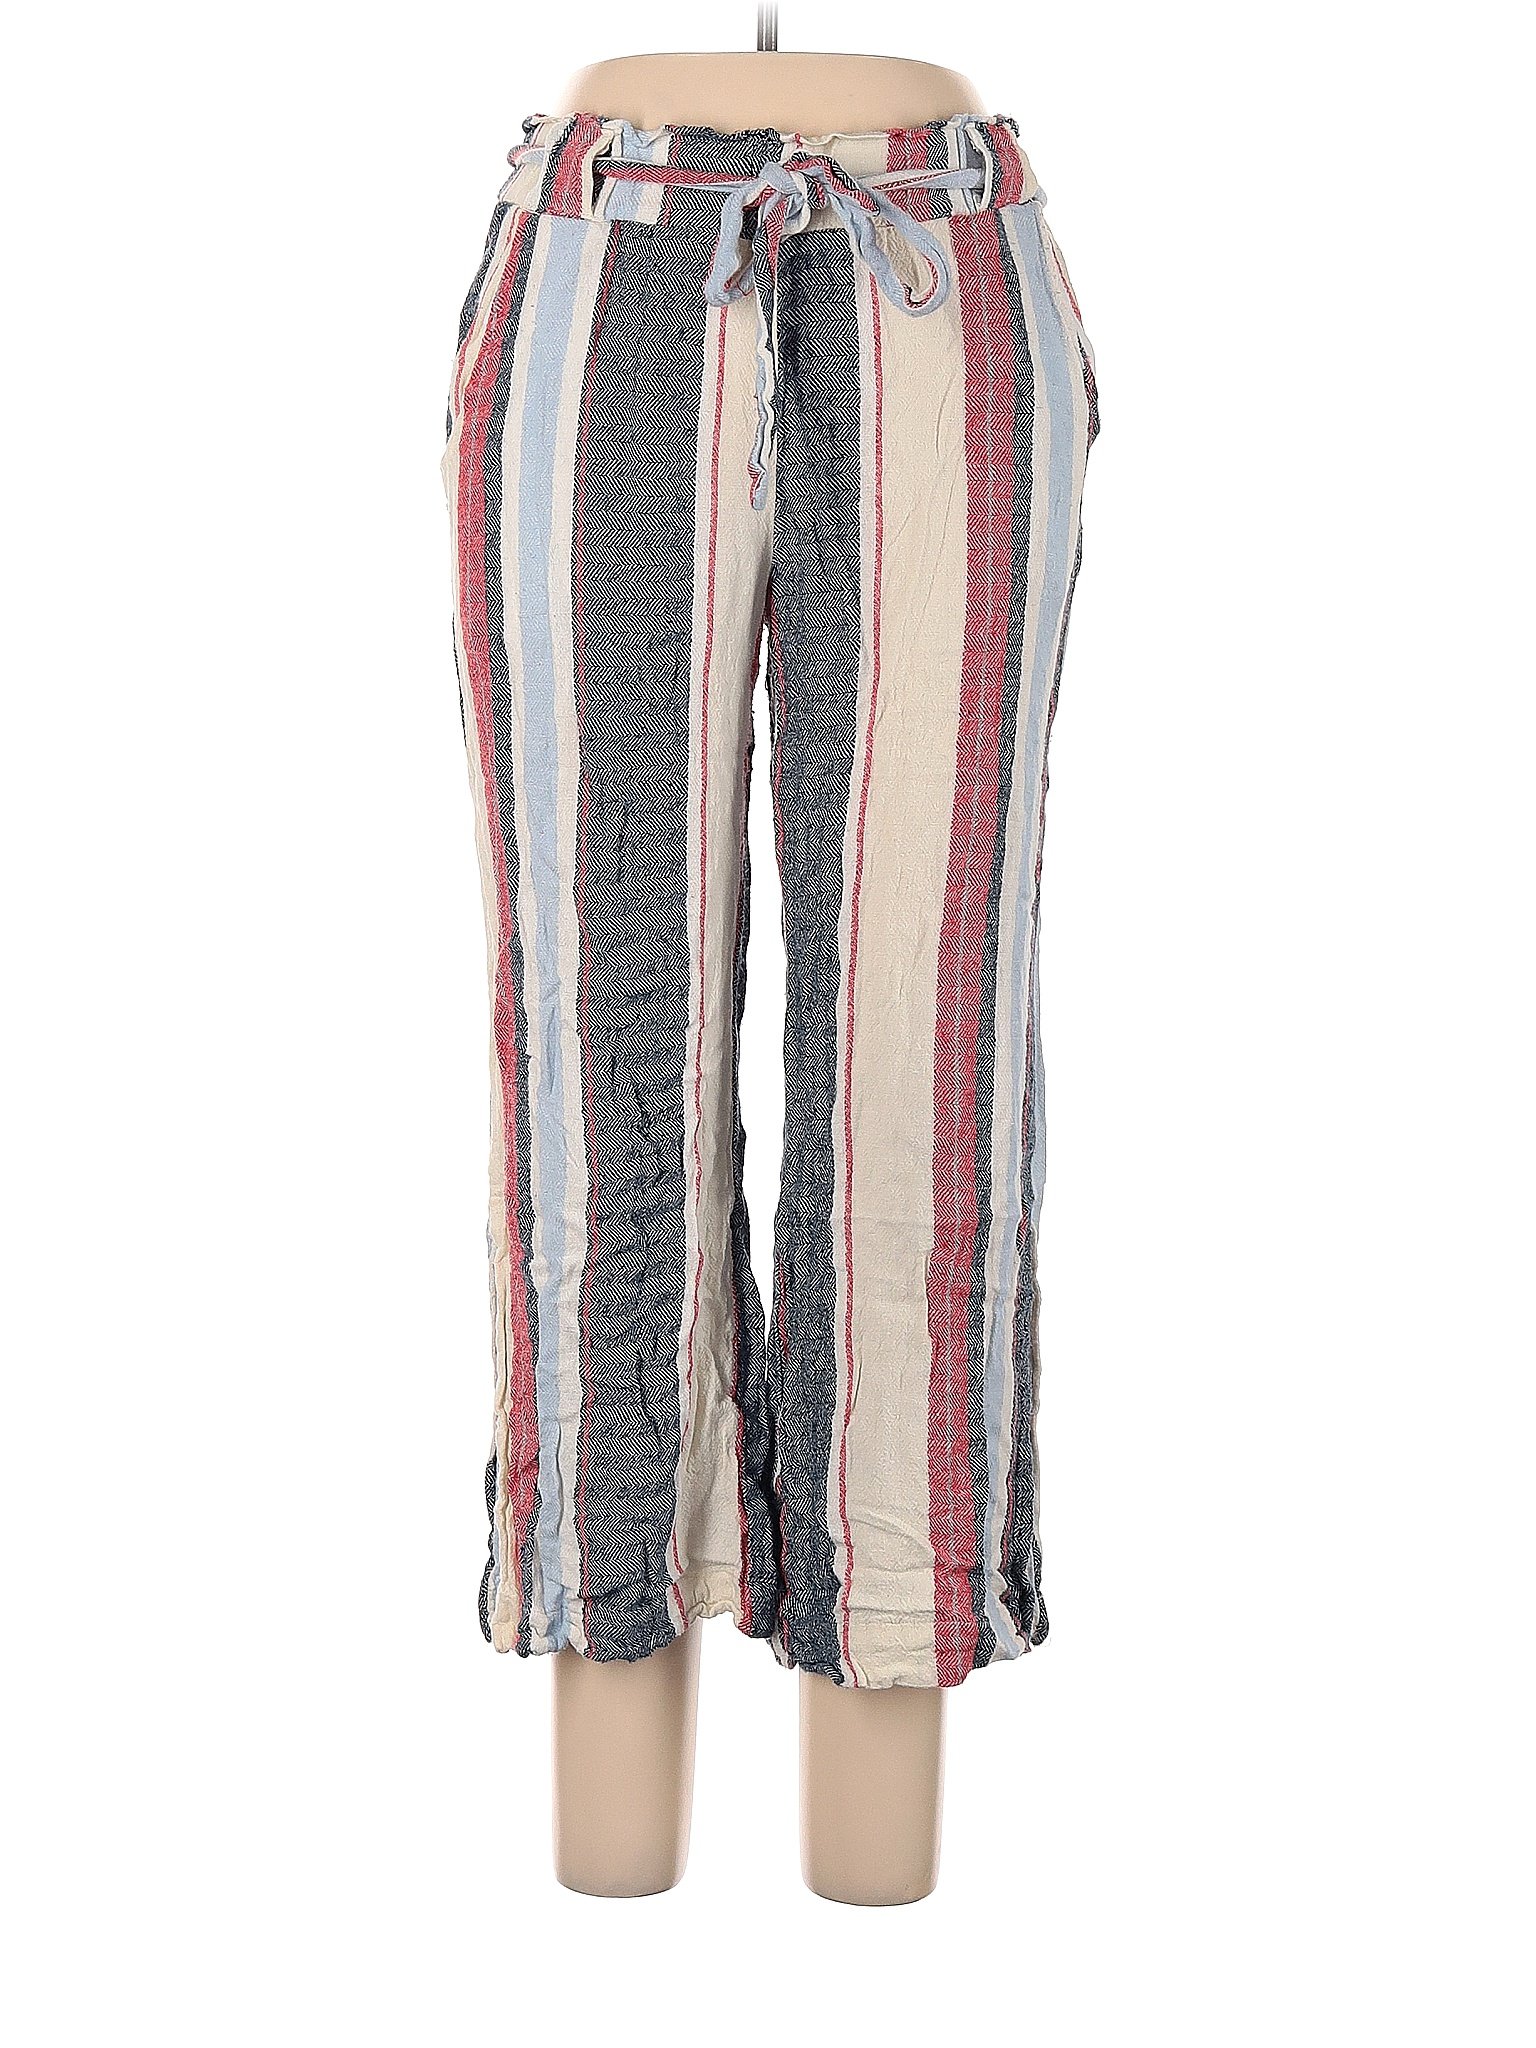 Indigo Rein Stripes Ivory Linen Pants Size L - 58% off | thredUP